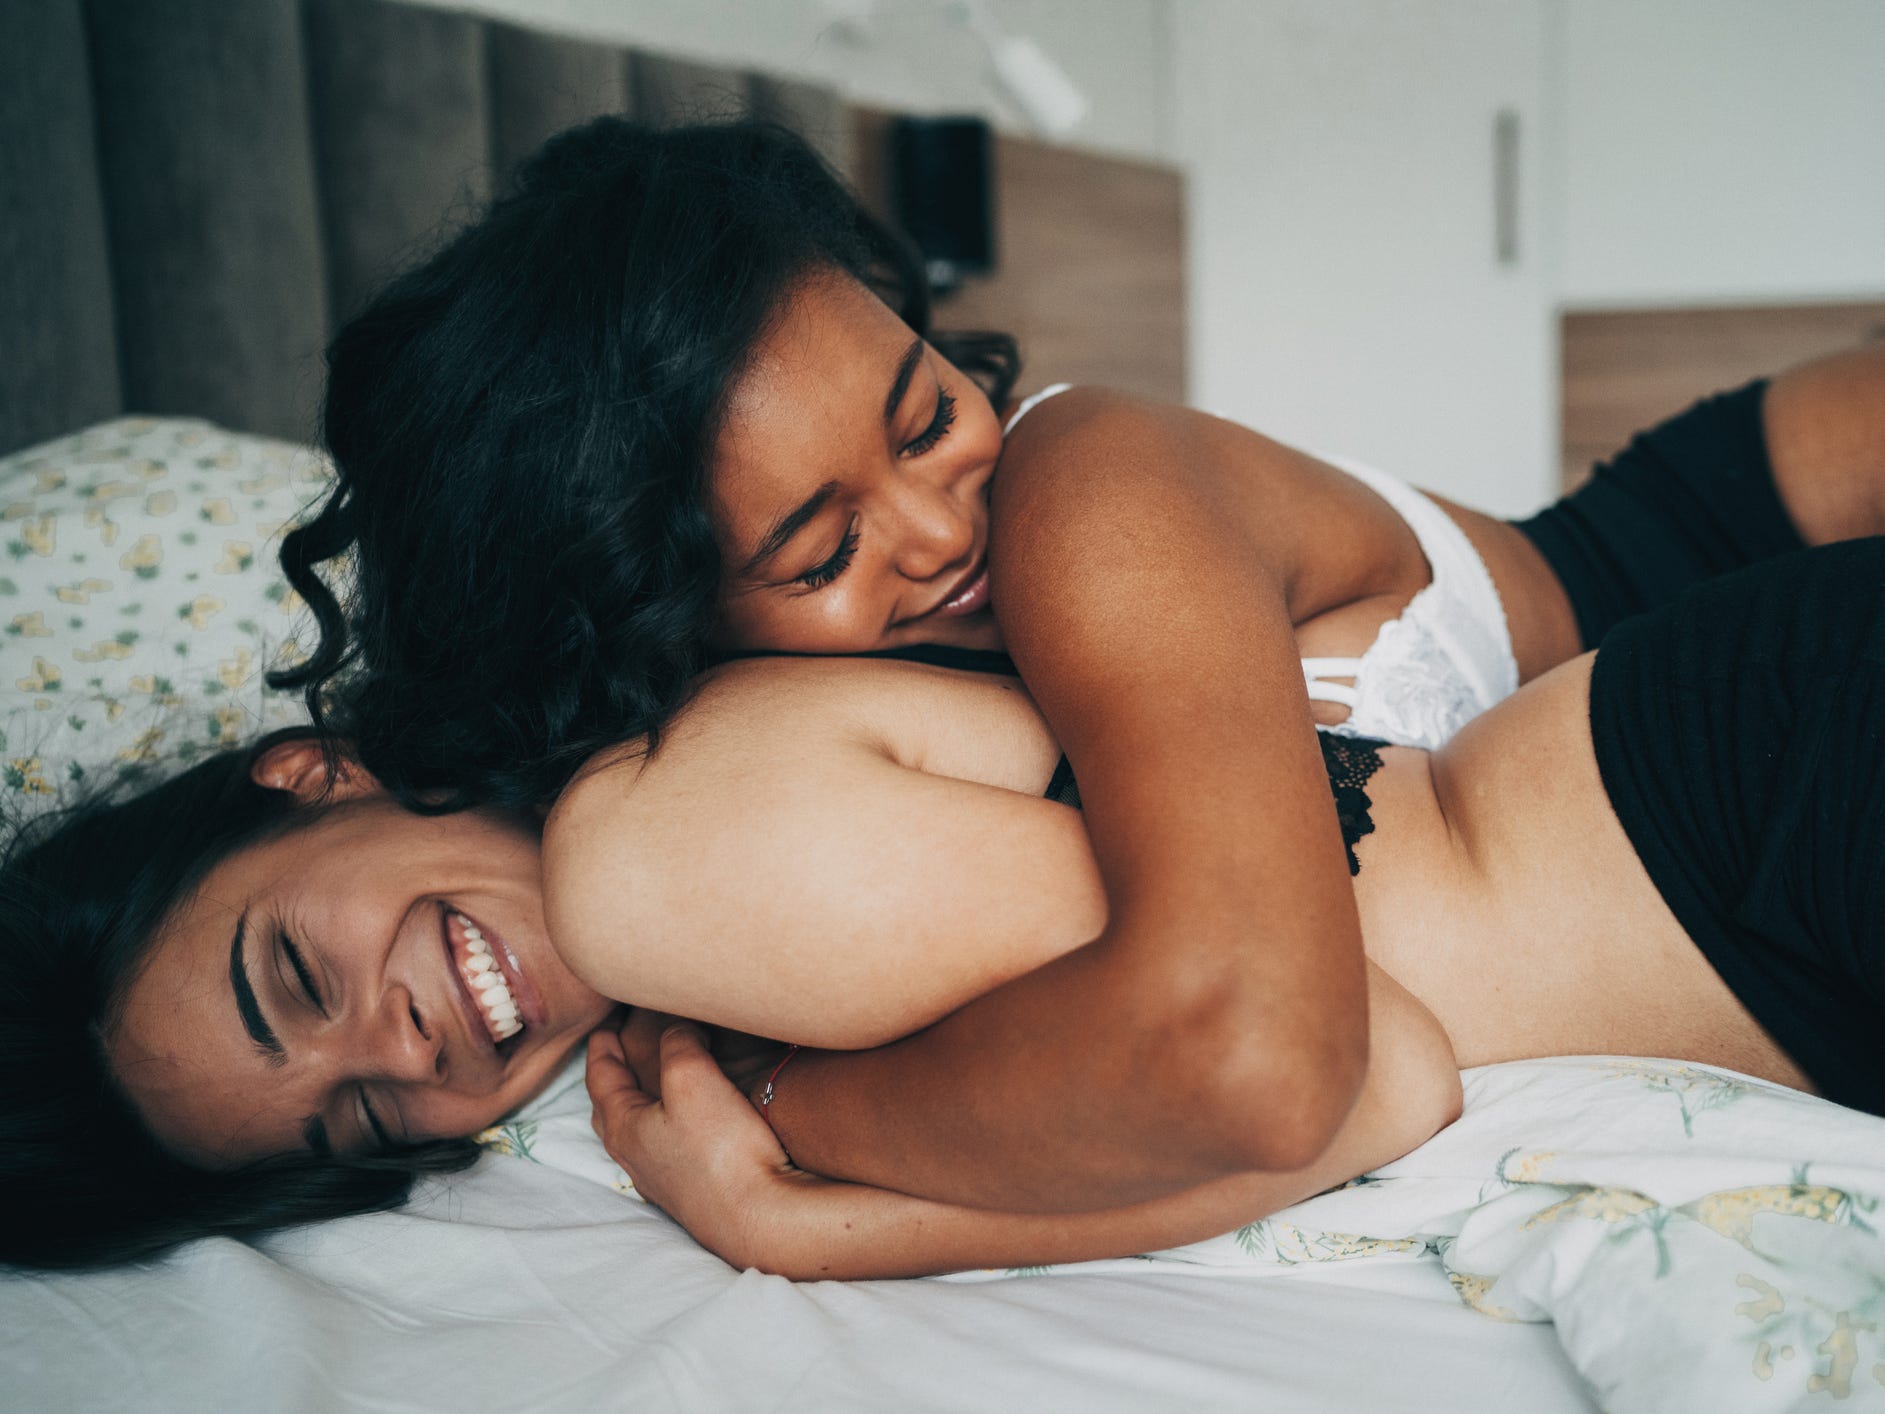 Women share their secrets for making penetrative sex more pleasurable photo